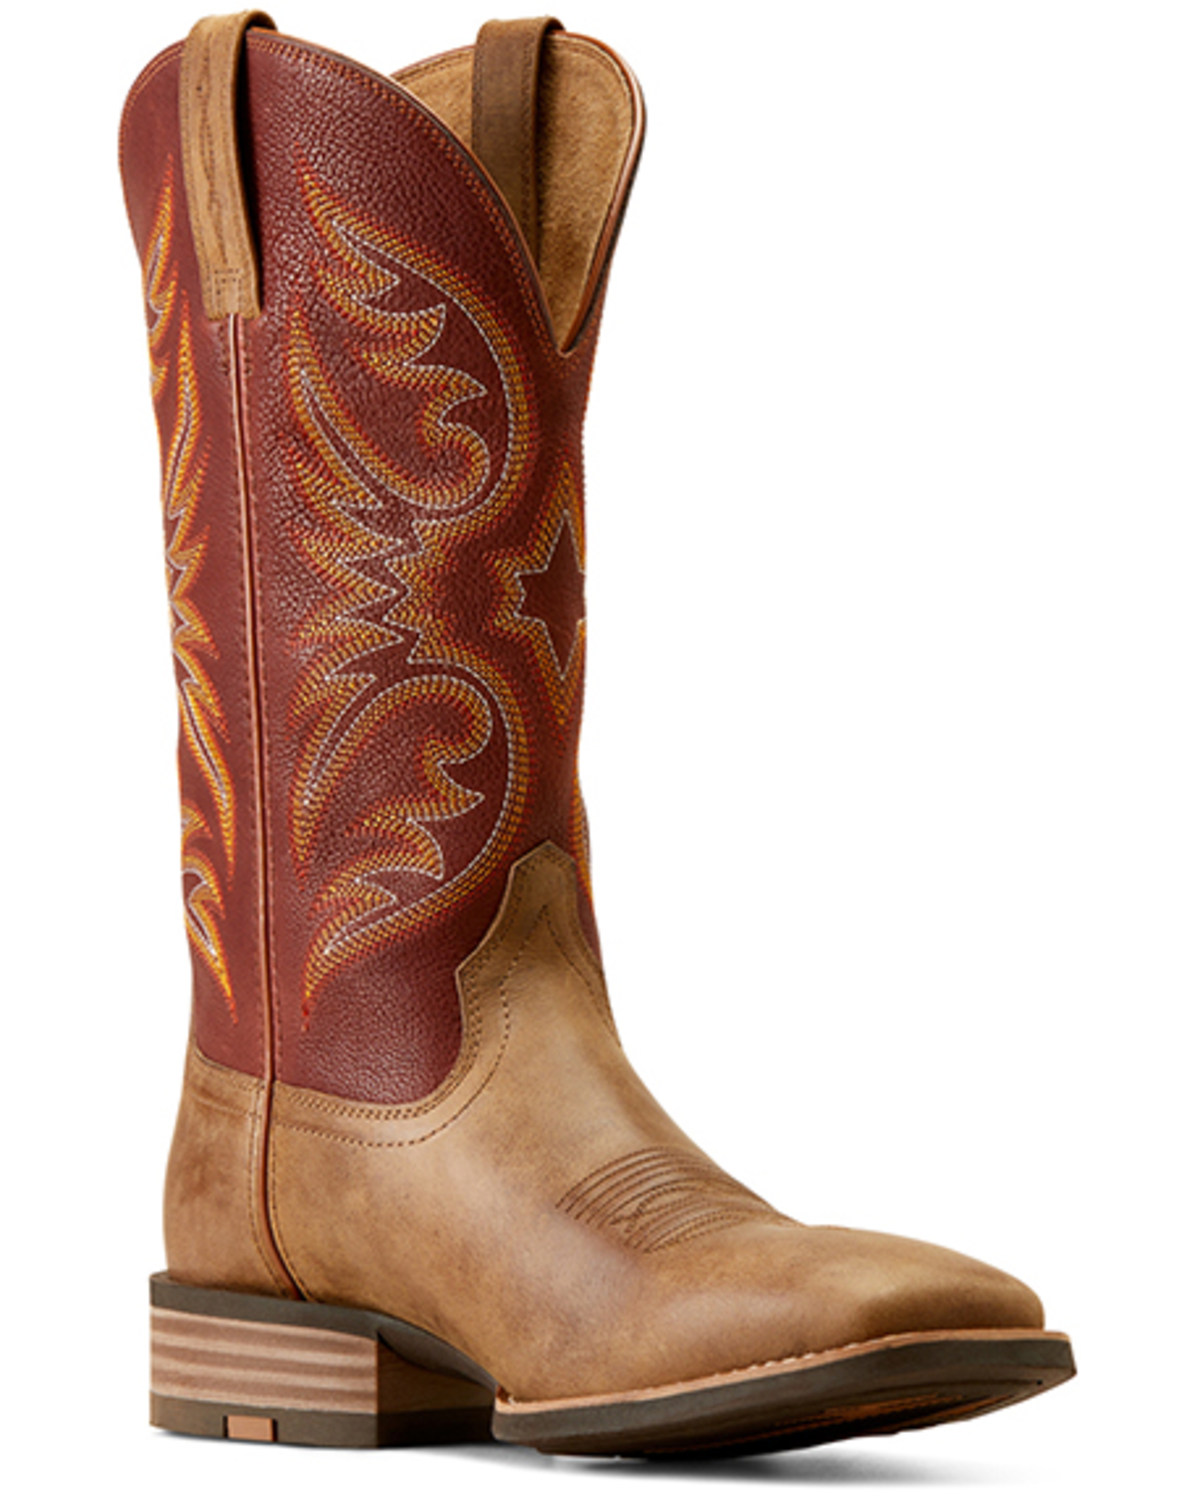 Ariat Men's Ricochet Western Boots - Broad Square Toe